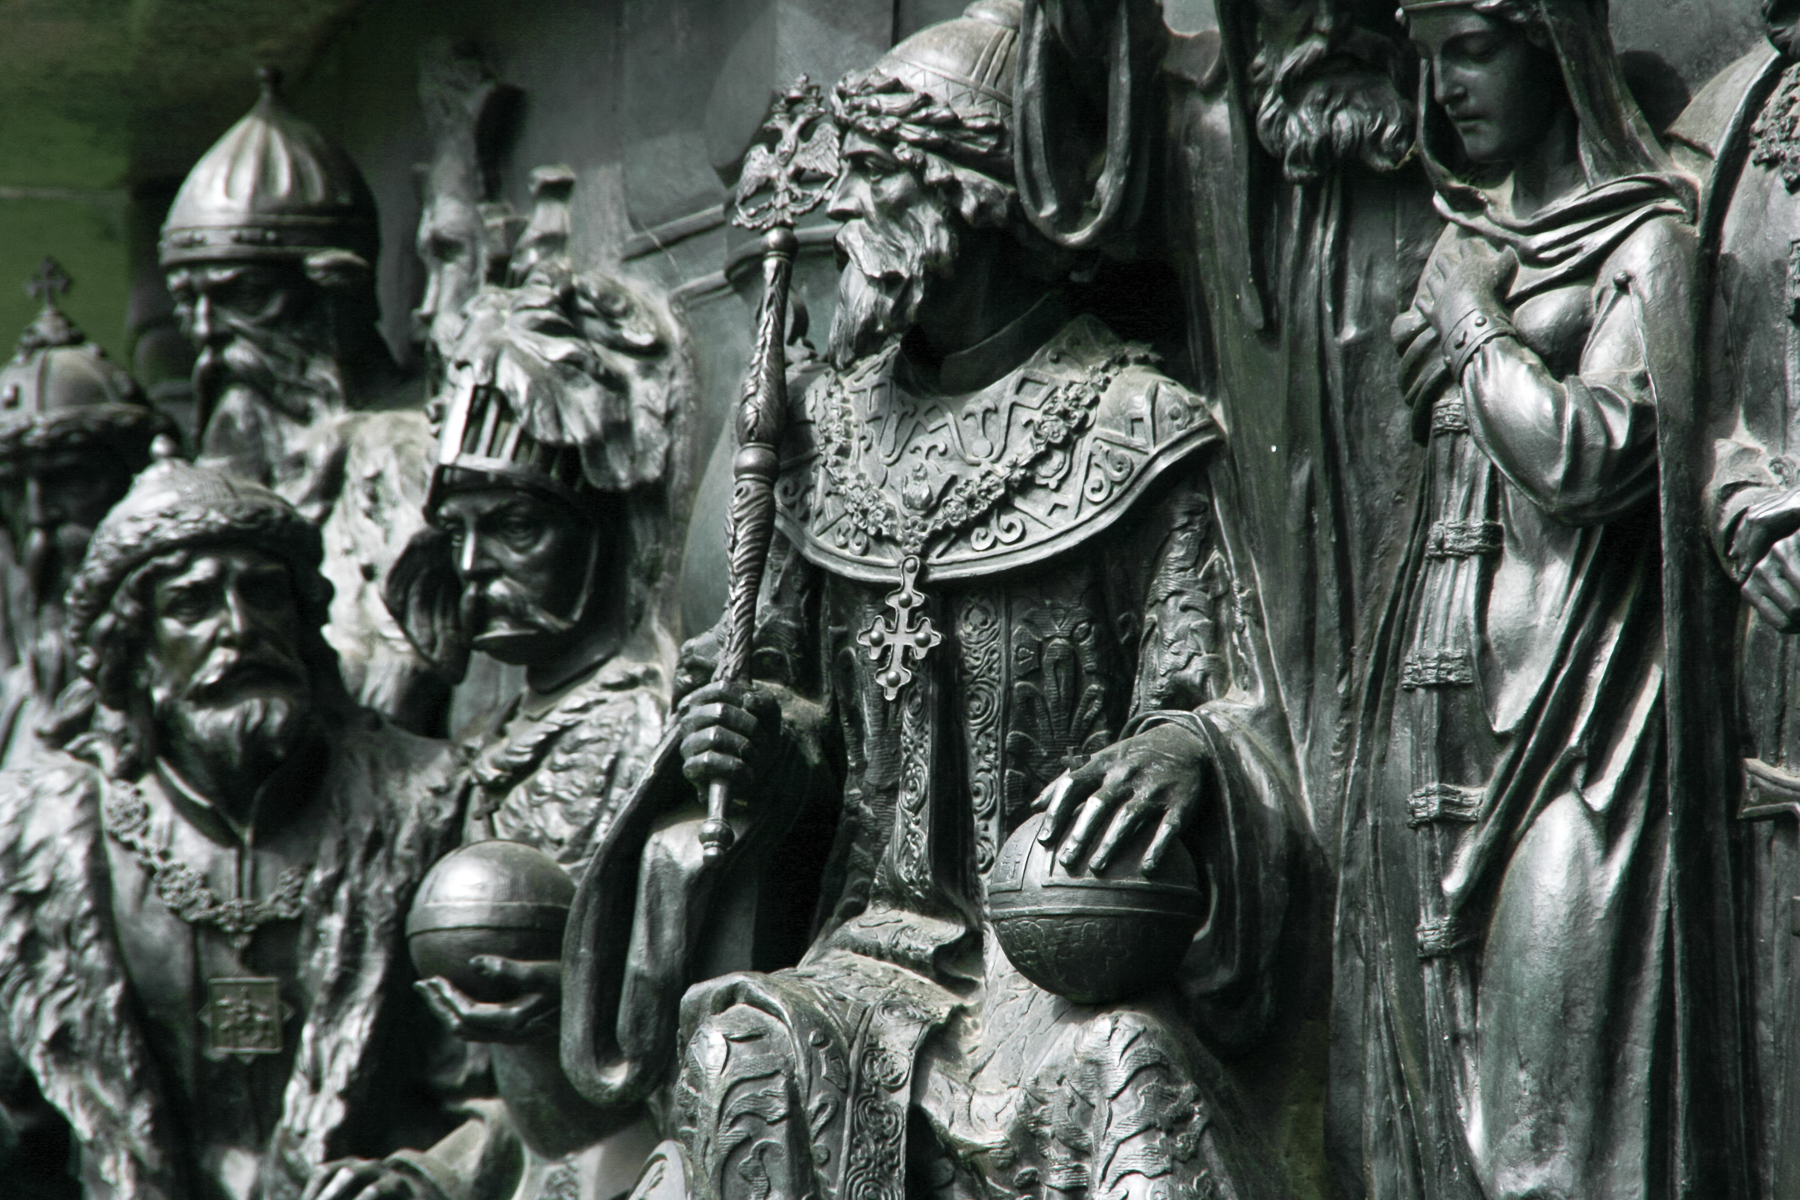 Bronze monument close-up photo